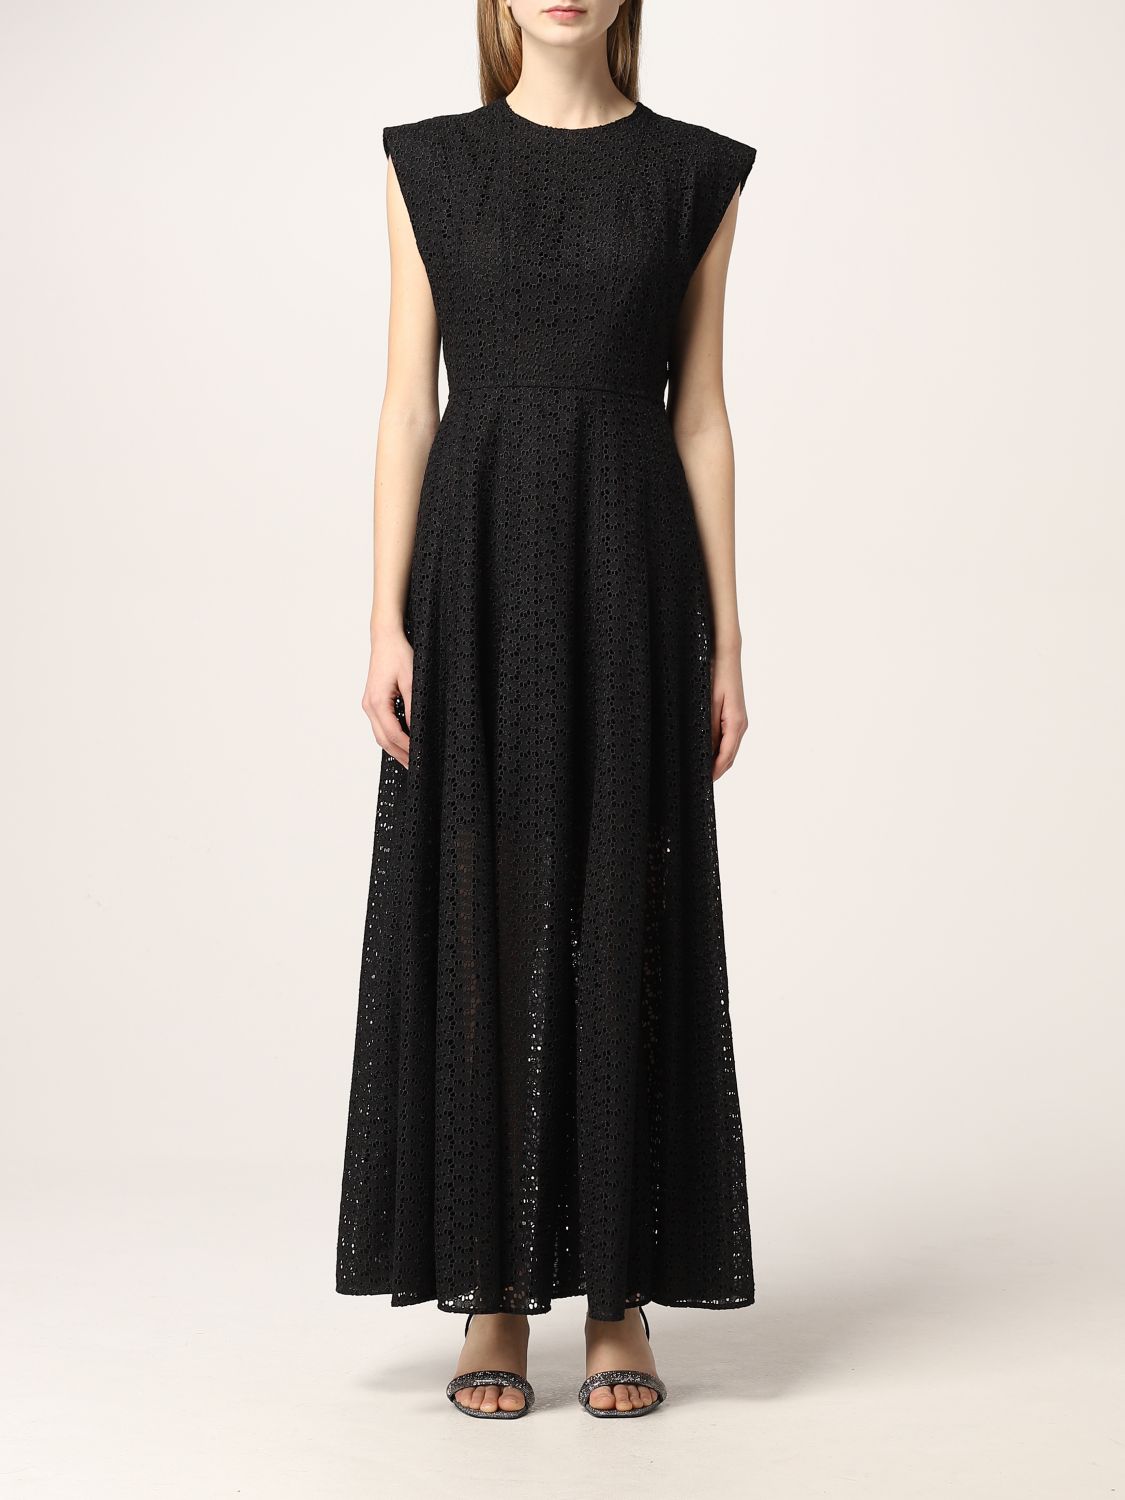 Dress Philosophy Di Lorenzo Serafini: Philosophy Di Lorenzo Serafini dress with floral embroidery black 1